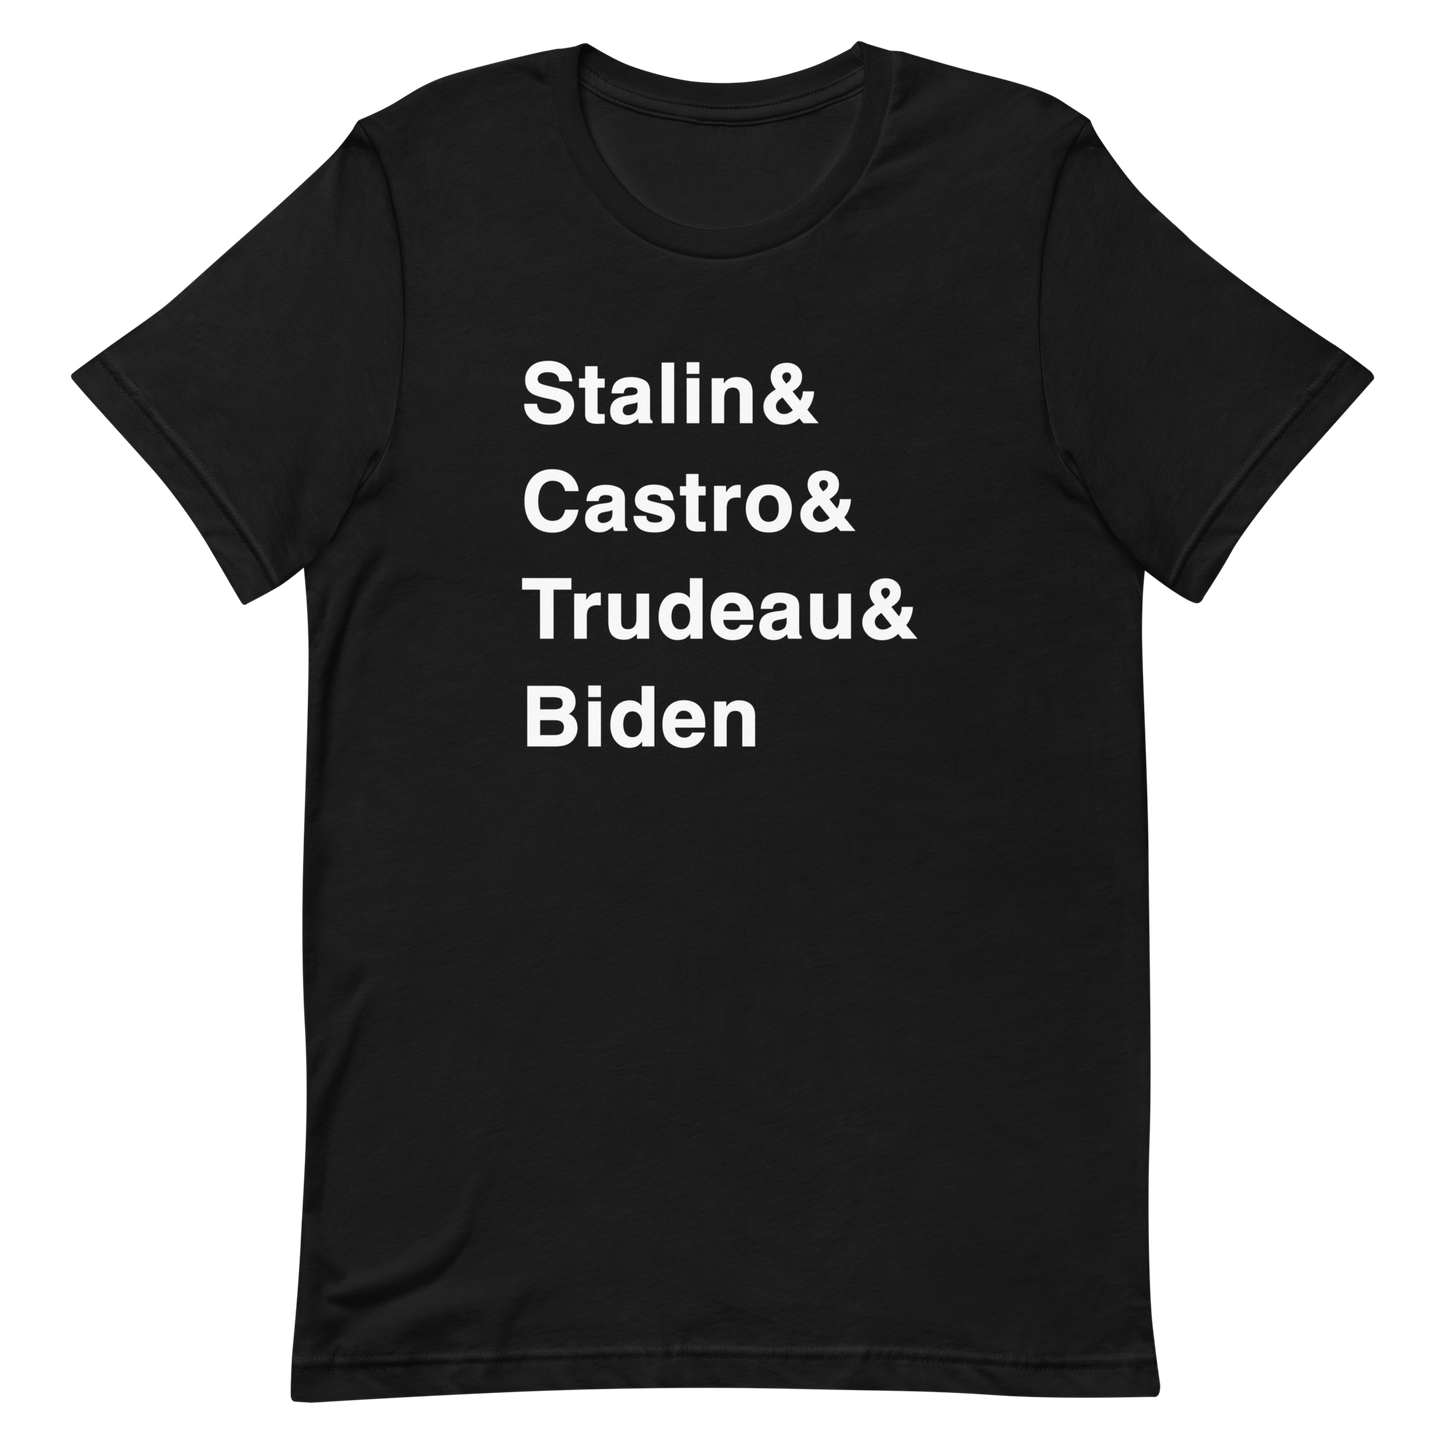 Stalin & Castro & Trudeau & Biden T-shirt